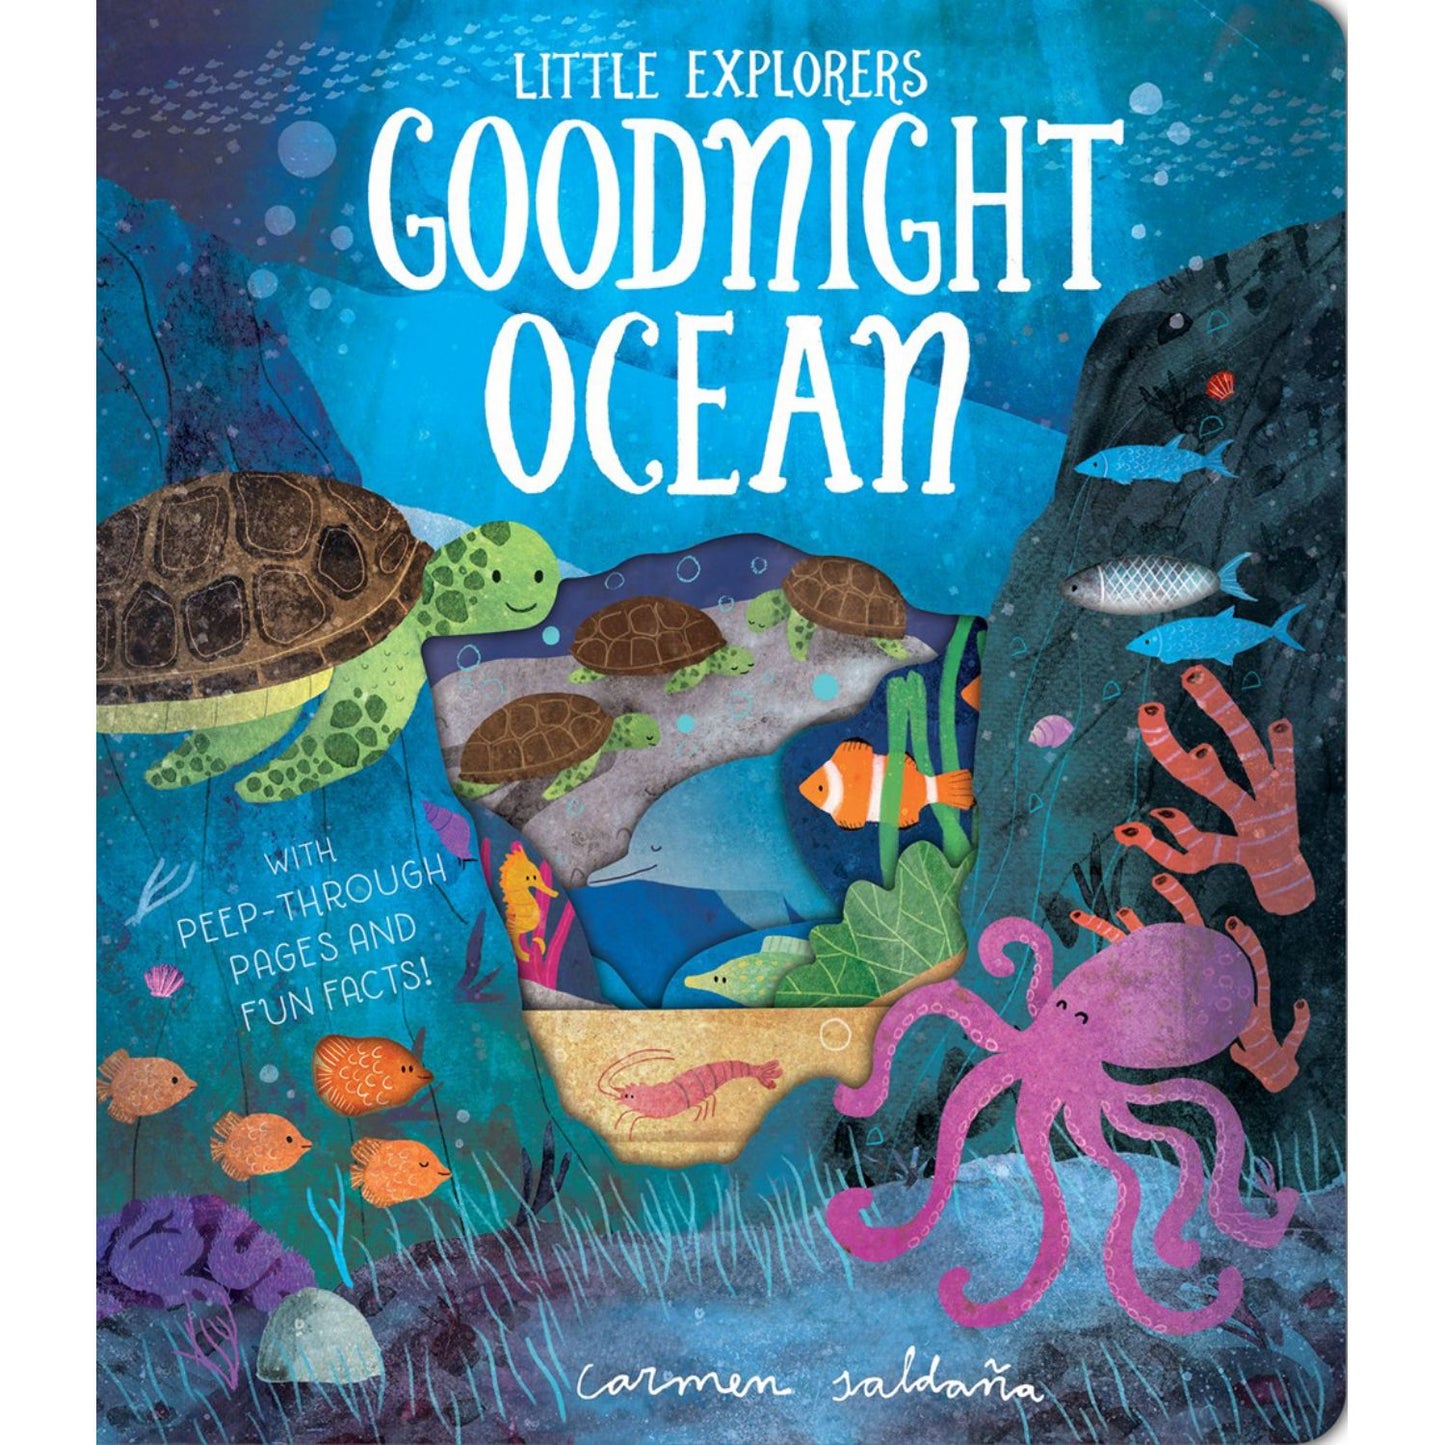 Goodnight Ocean | Board Book | Children’s Book on Oceans & Seas